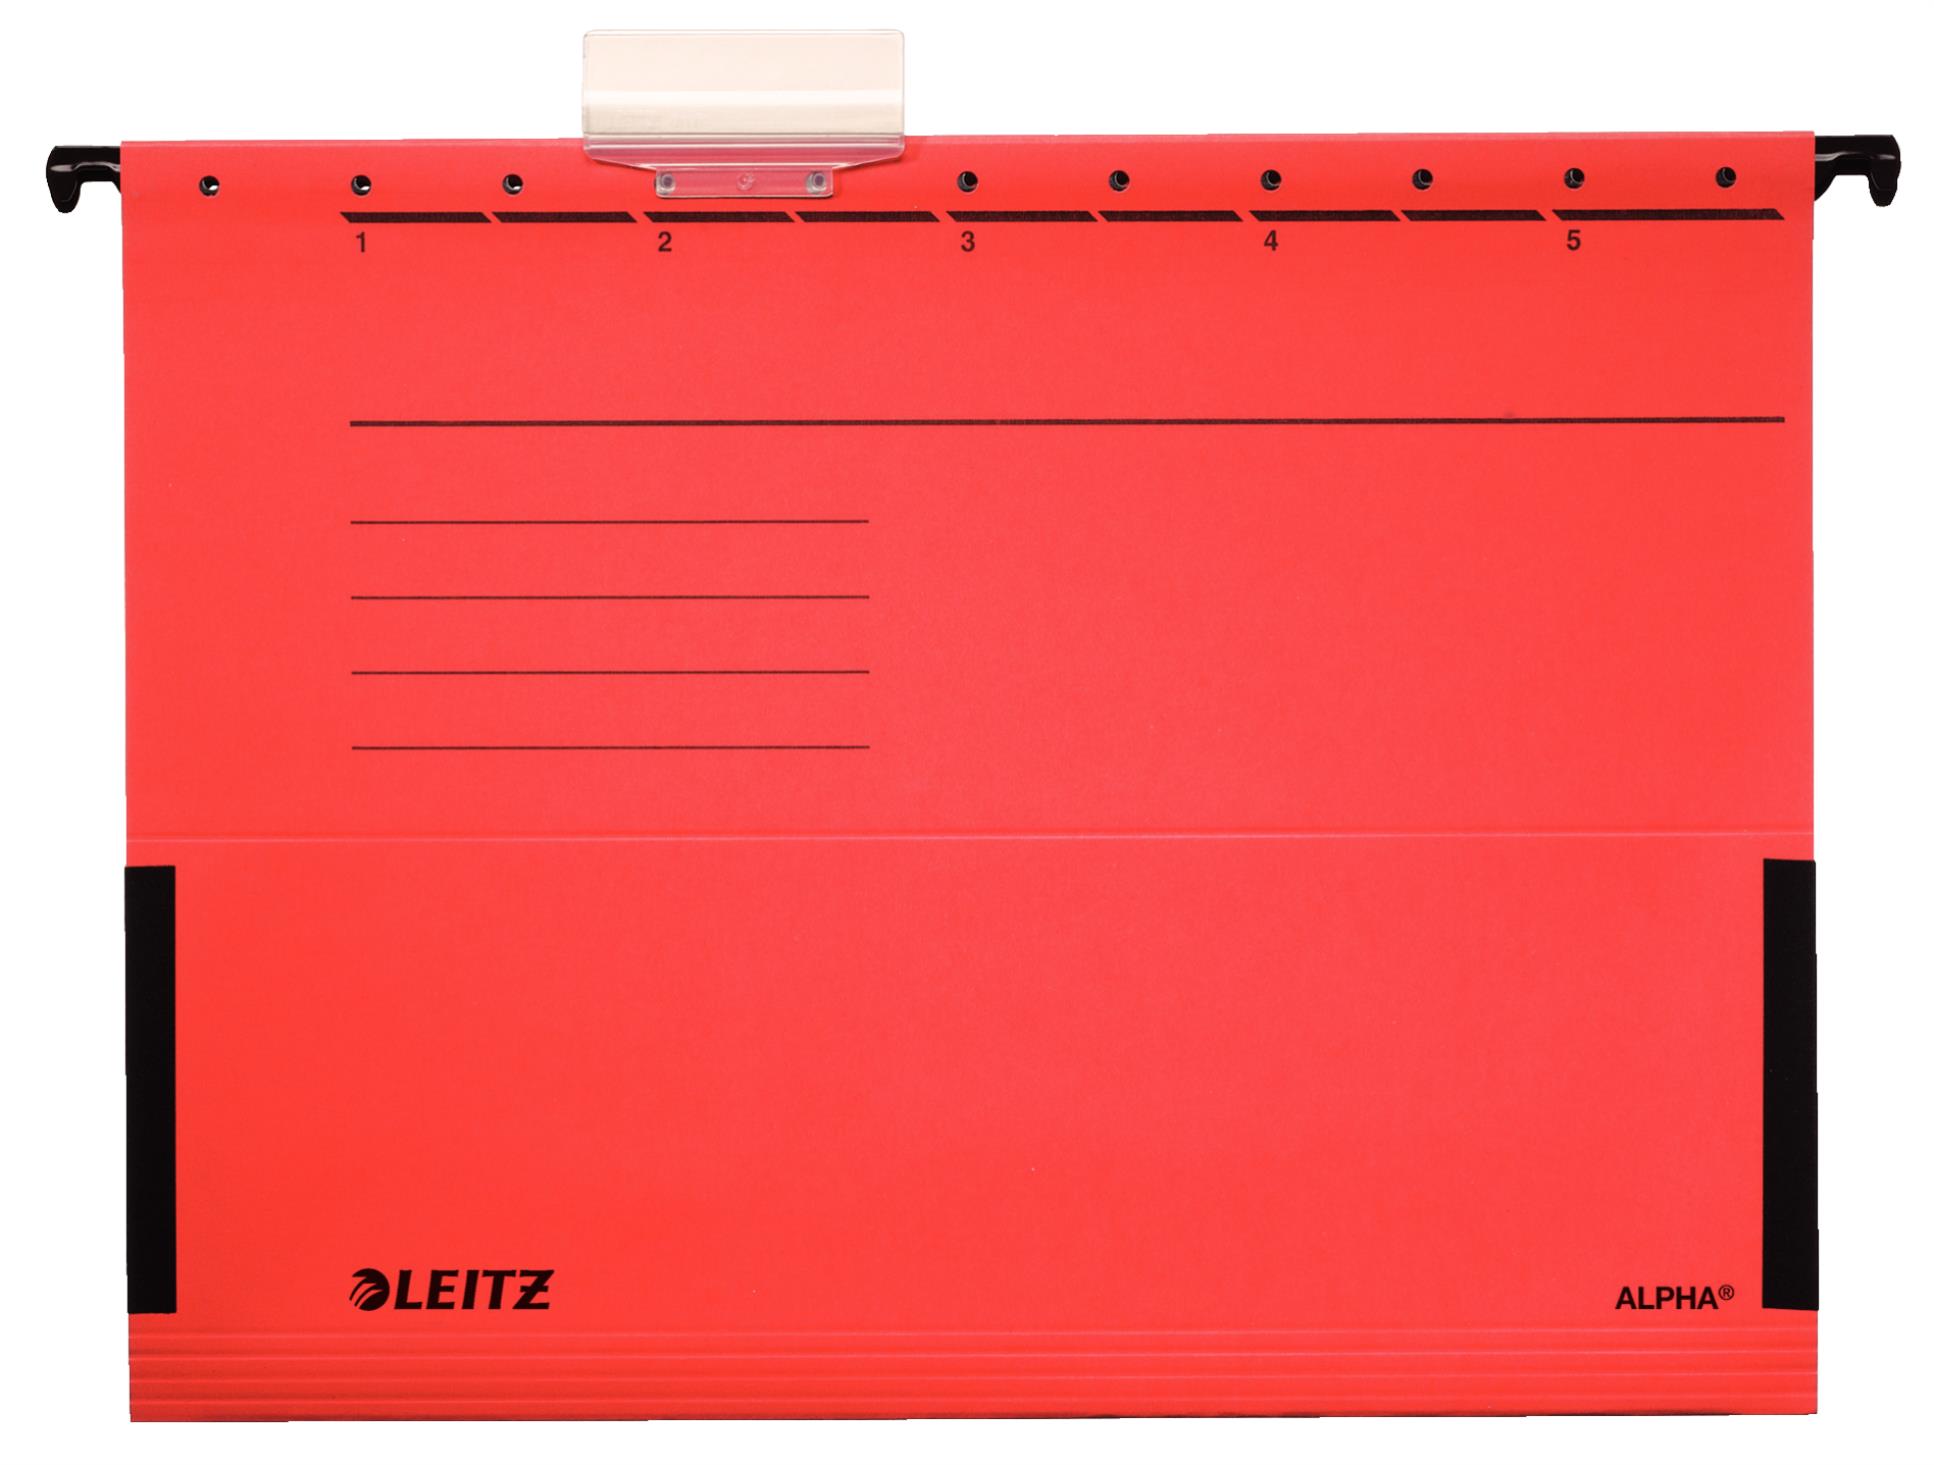 Desky závěsné Leitz Alpha s bočnicemi červené, 25 ks